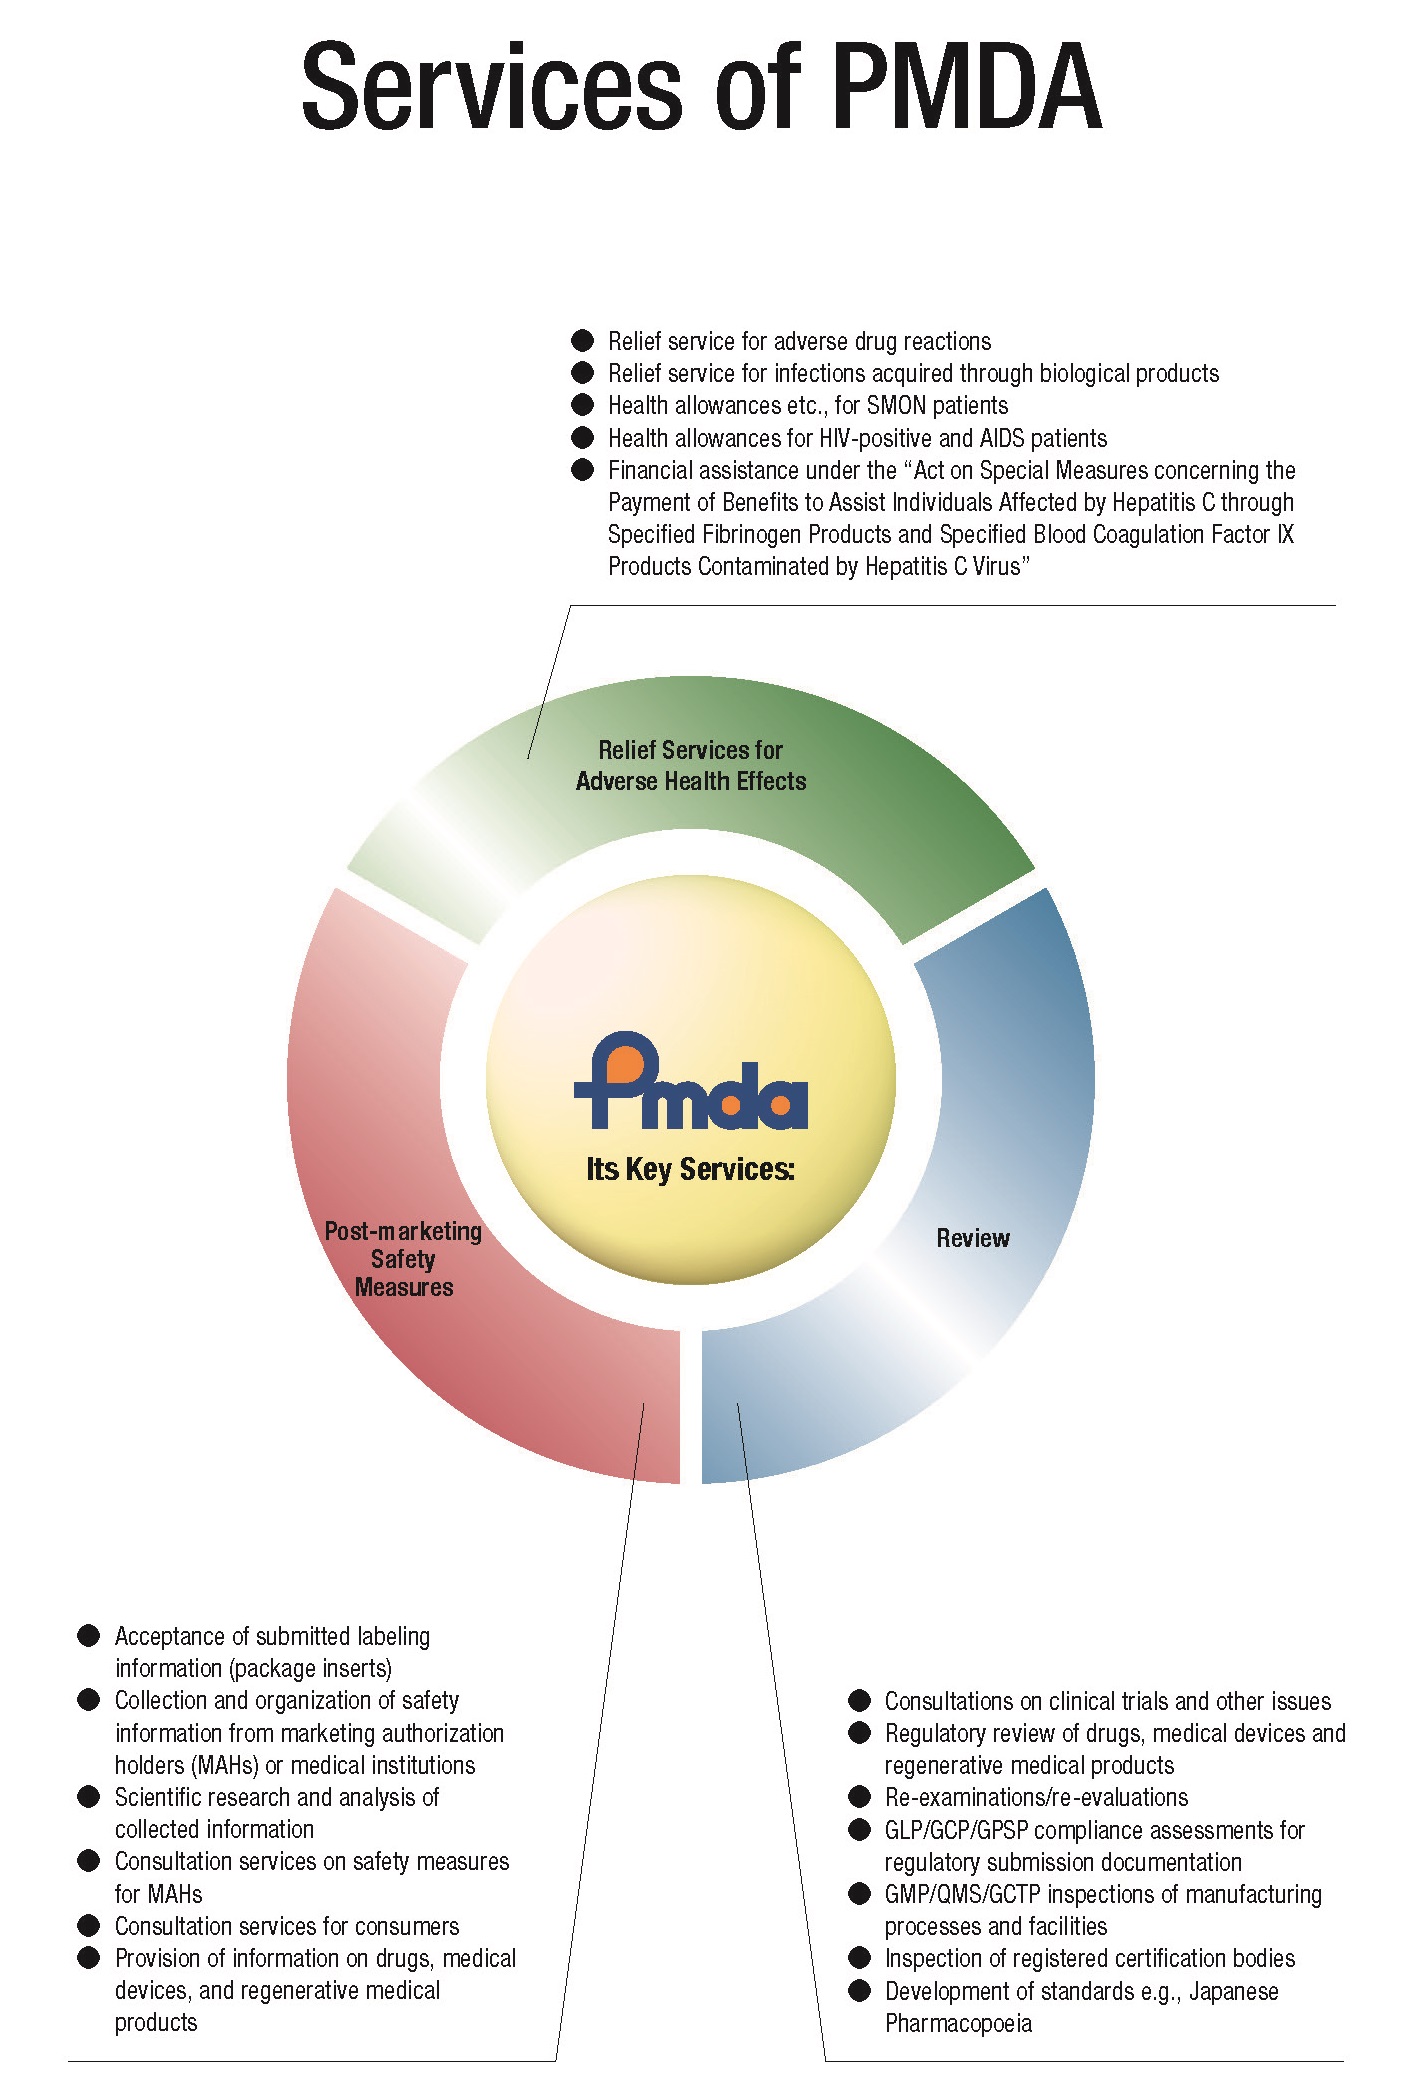 Services of PMDA